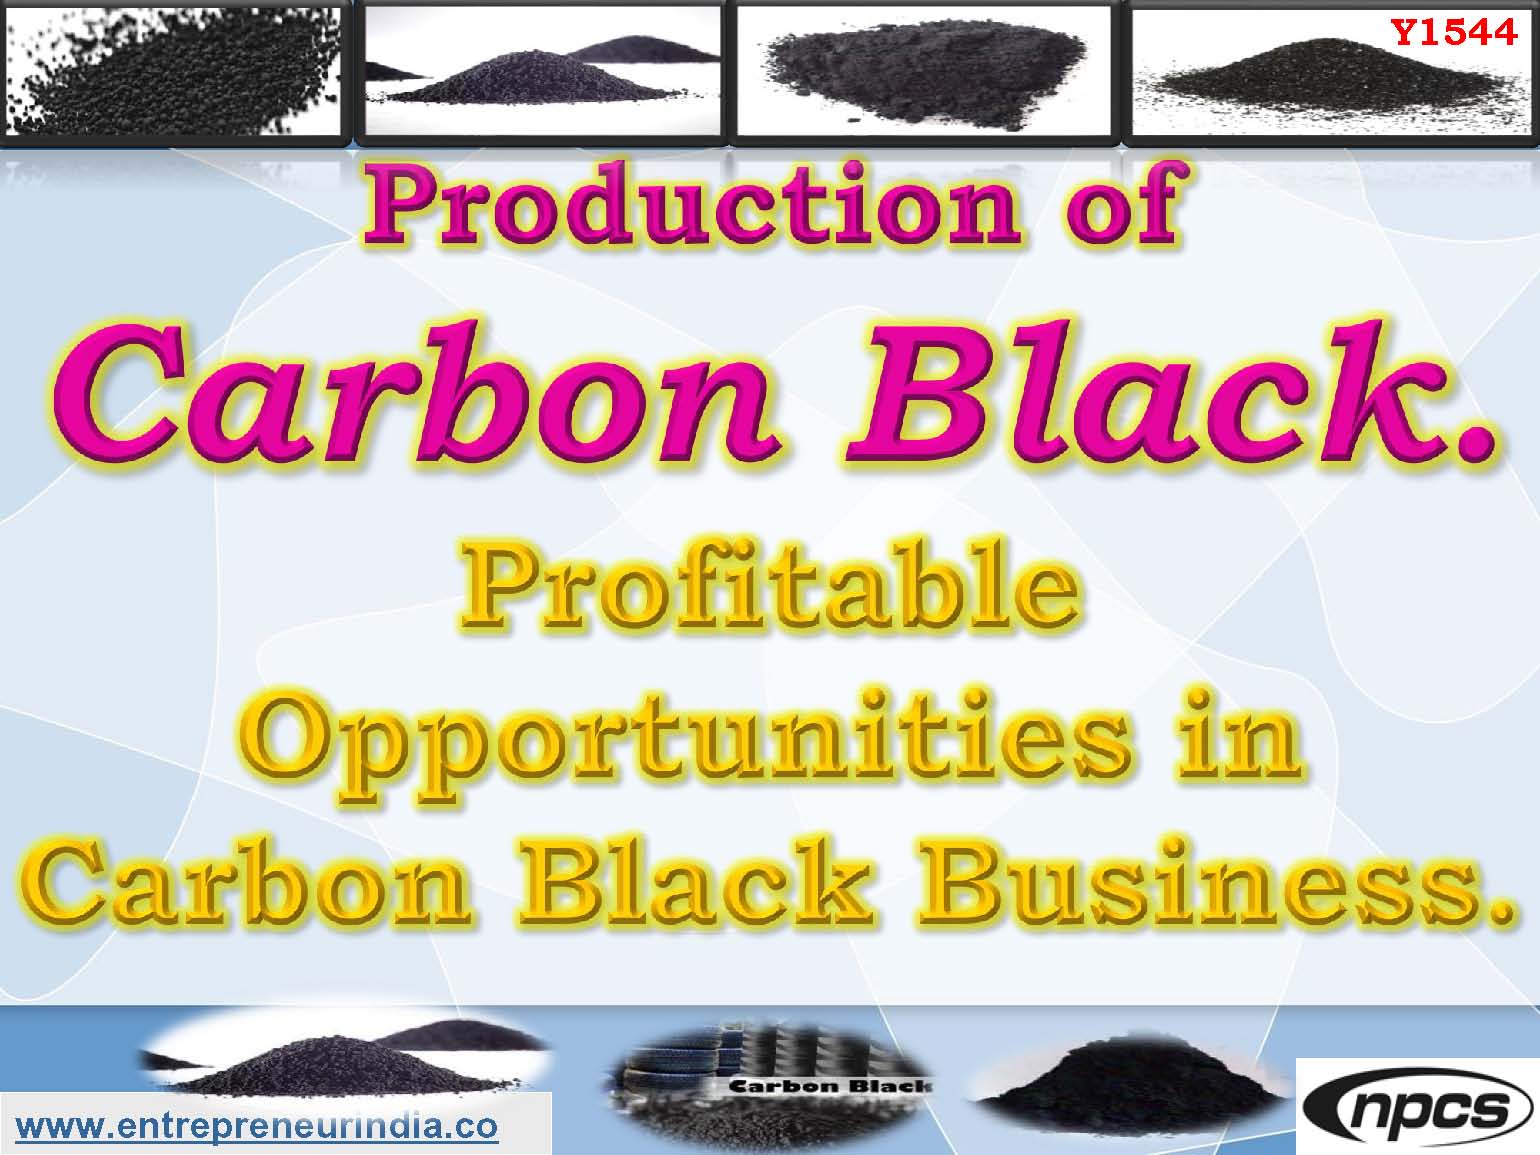 Production of Carbon Black.jpg